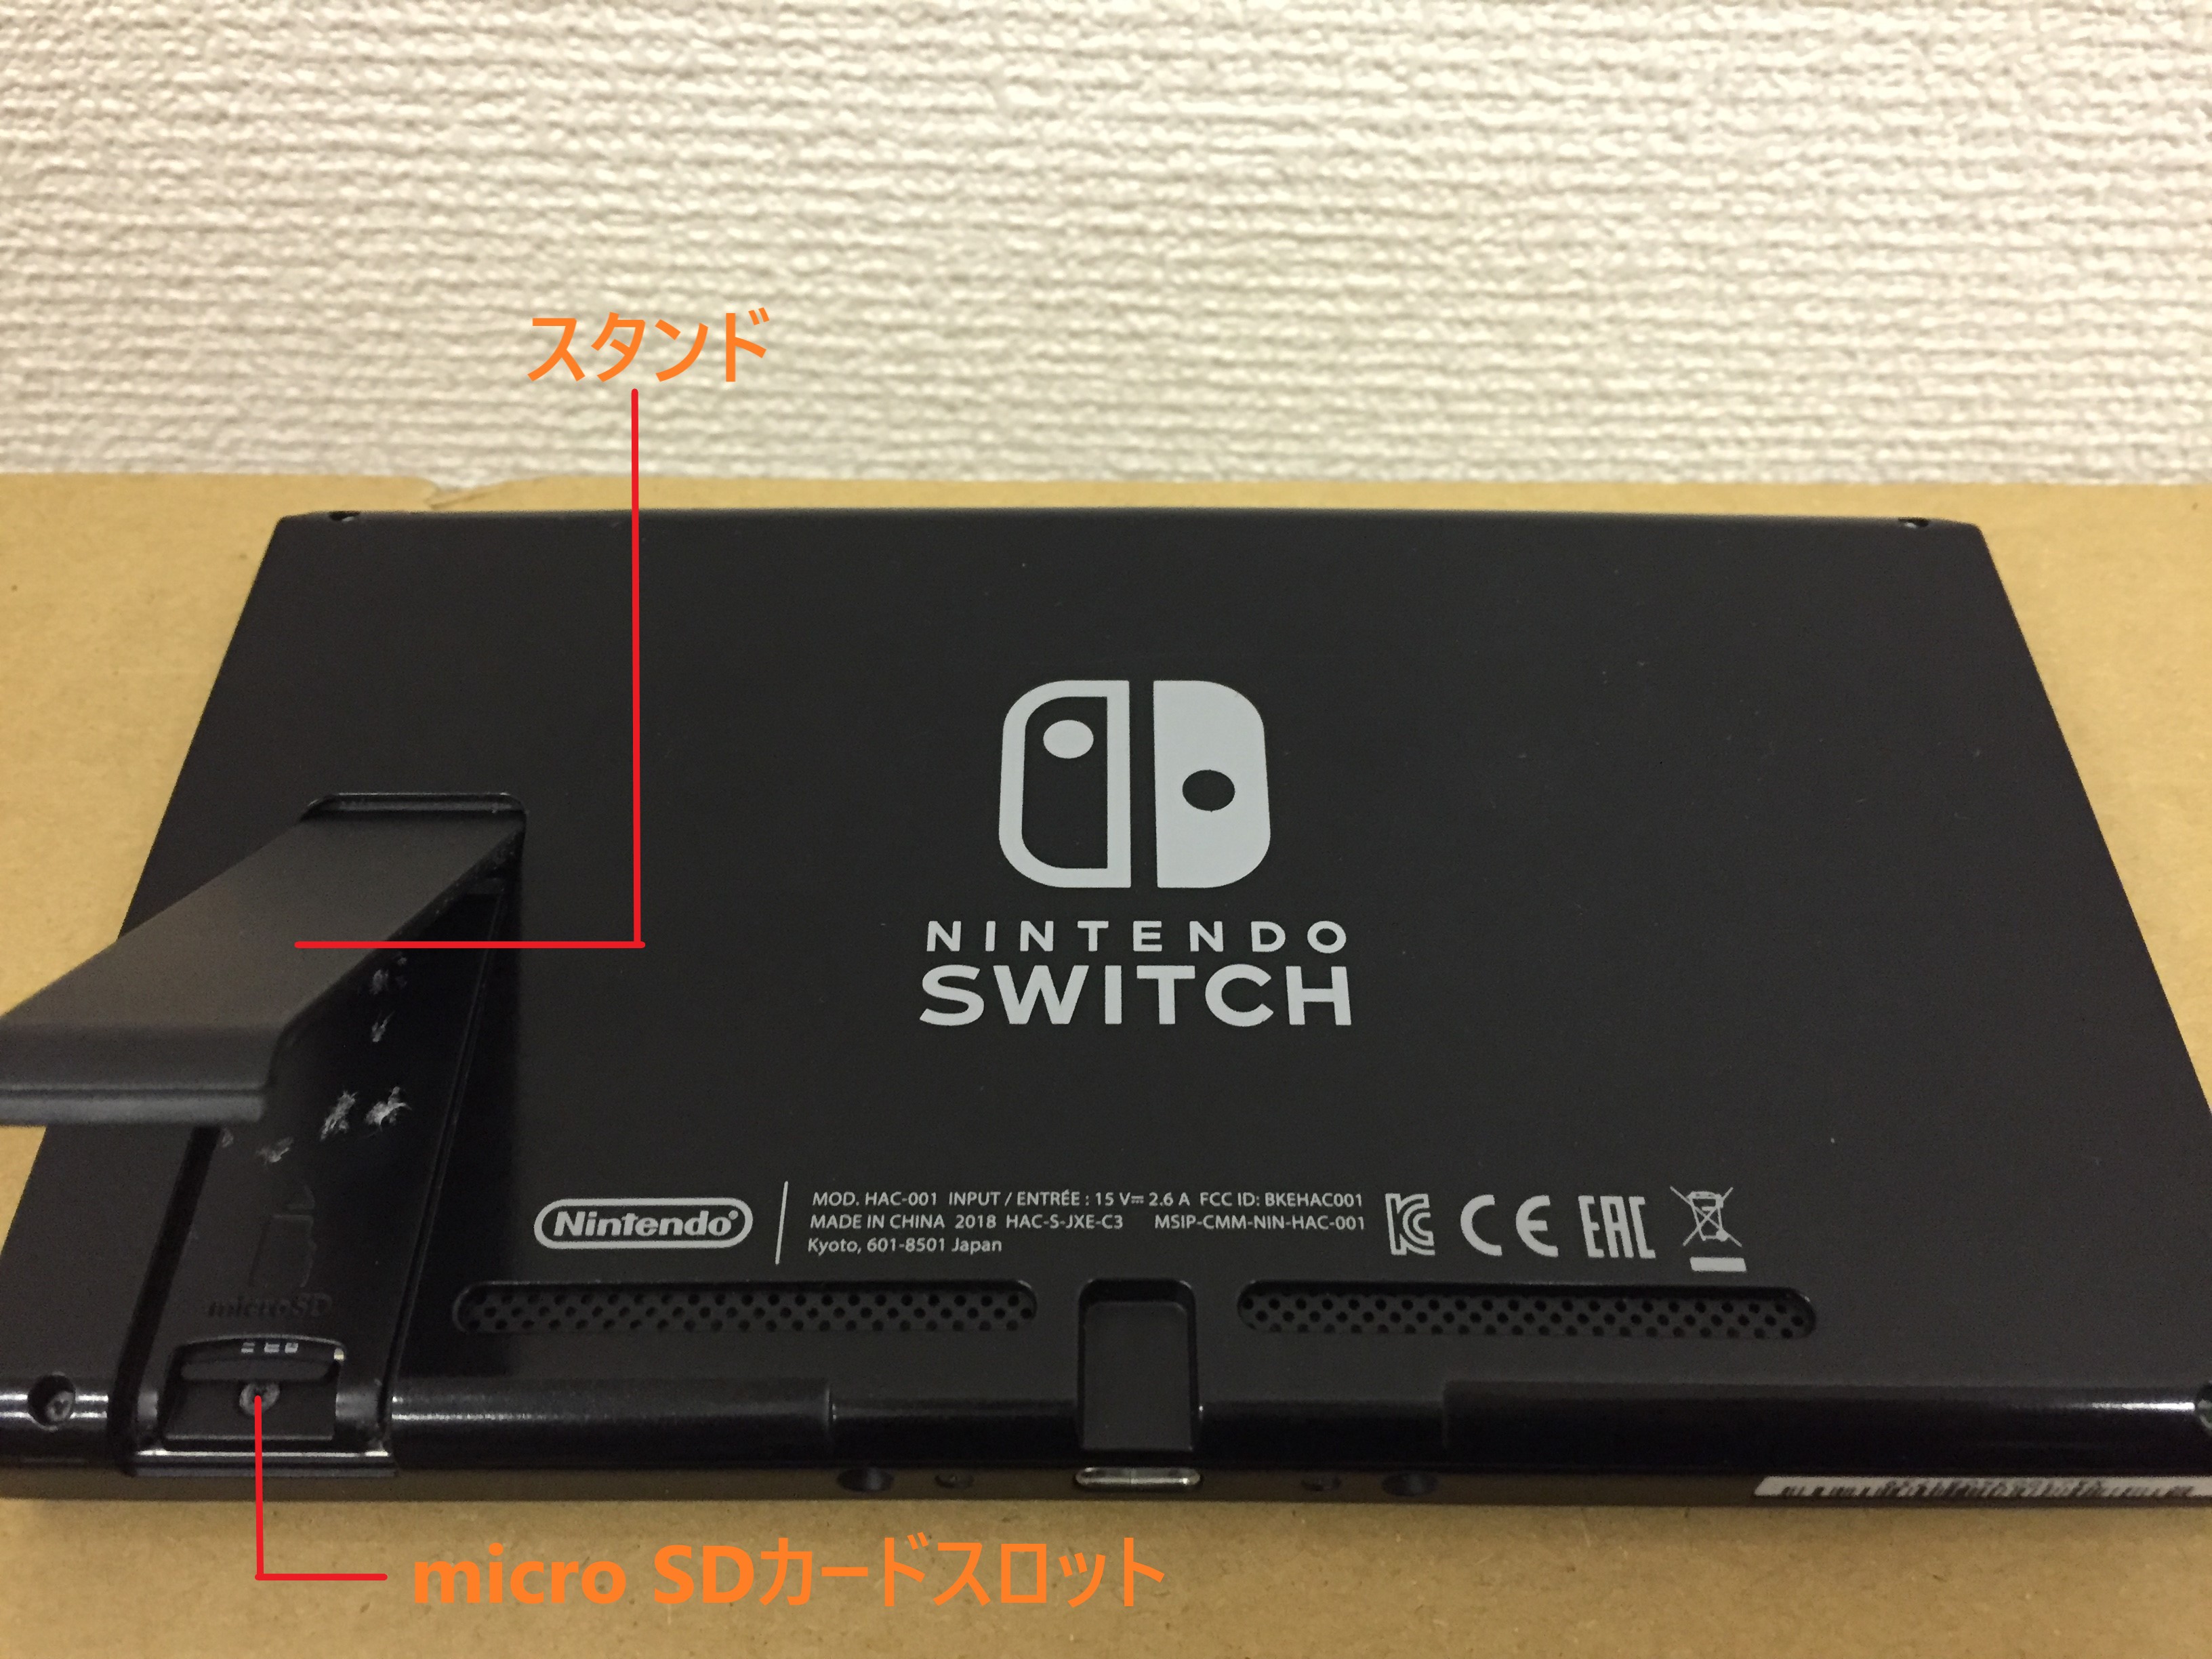 Nintendo Switchが突然の電池切れ そんなトラブルに遭わないように早めのバッテリー交換を Nintendo3ds Switch Psp 修理のゲームホスピタル Nintendo3ds ニンテンドーds Psp Switch 修理